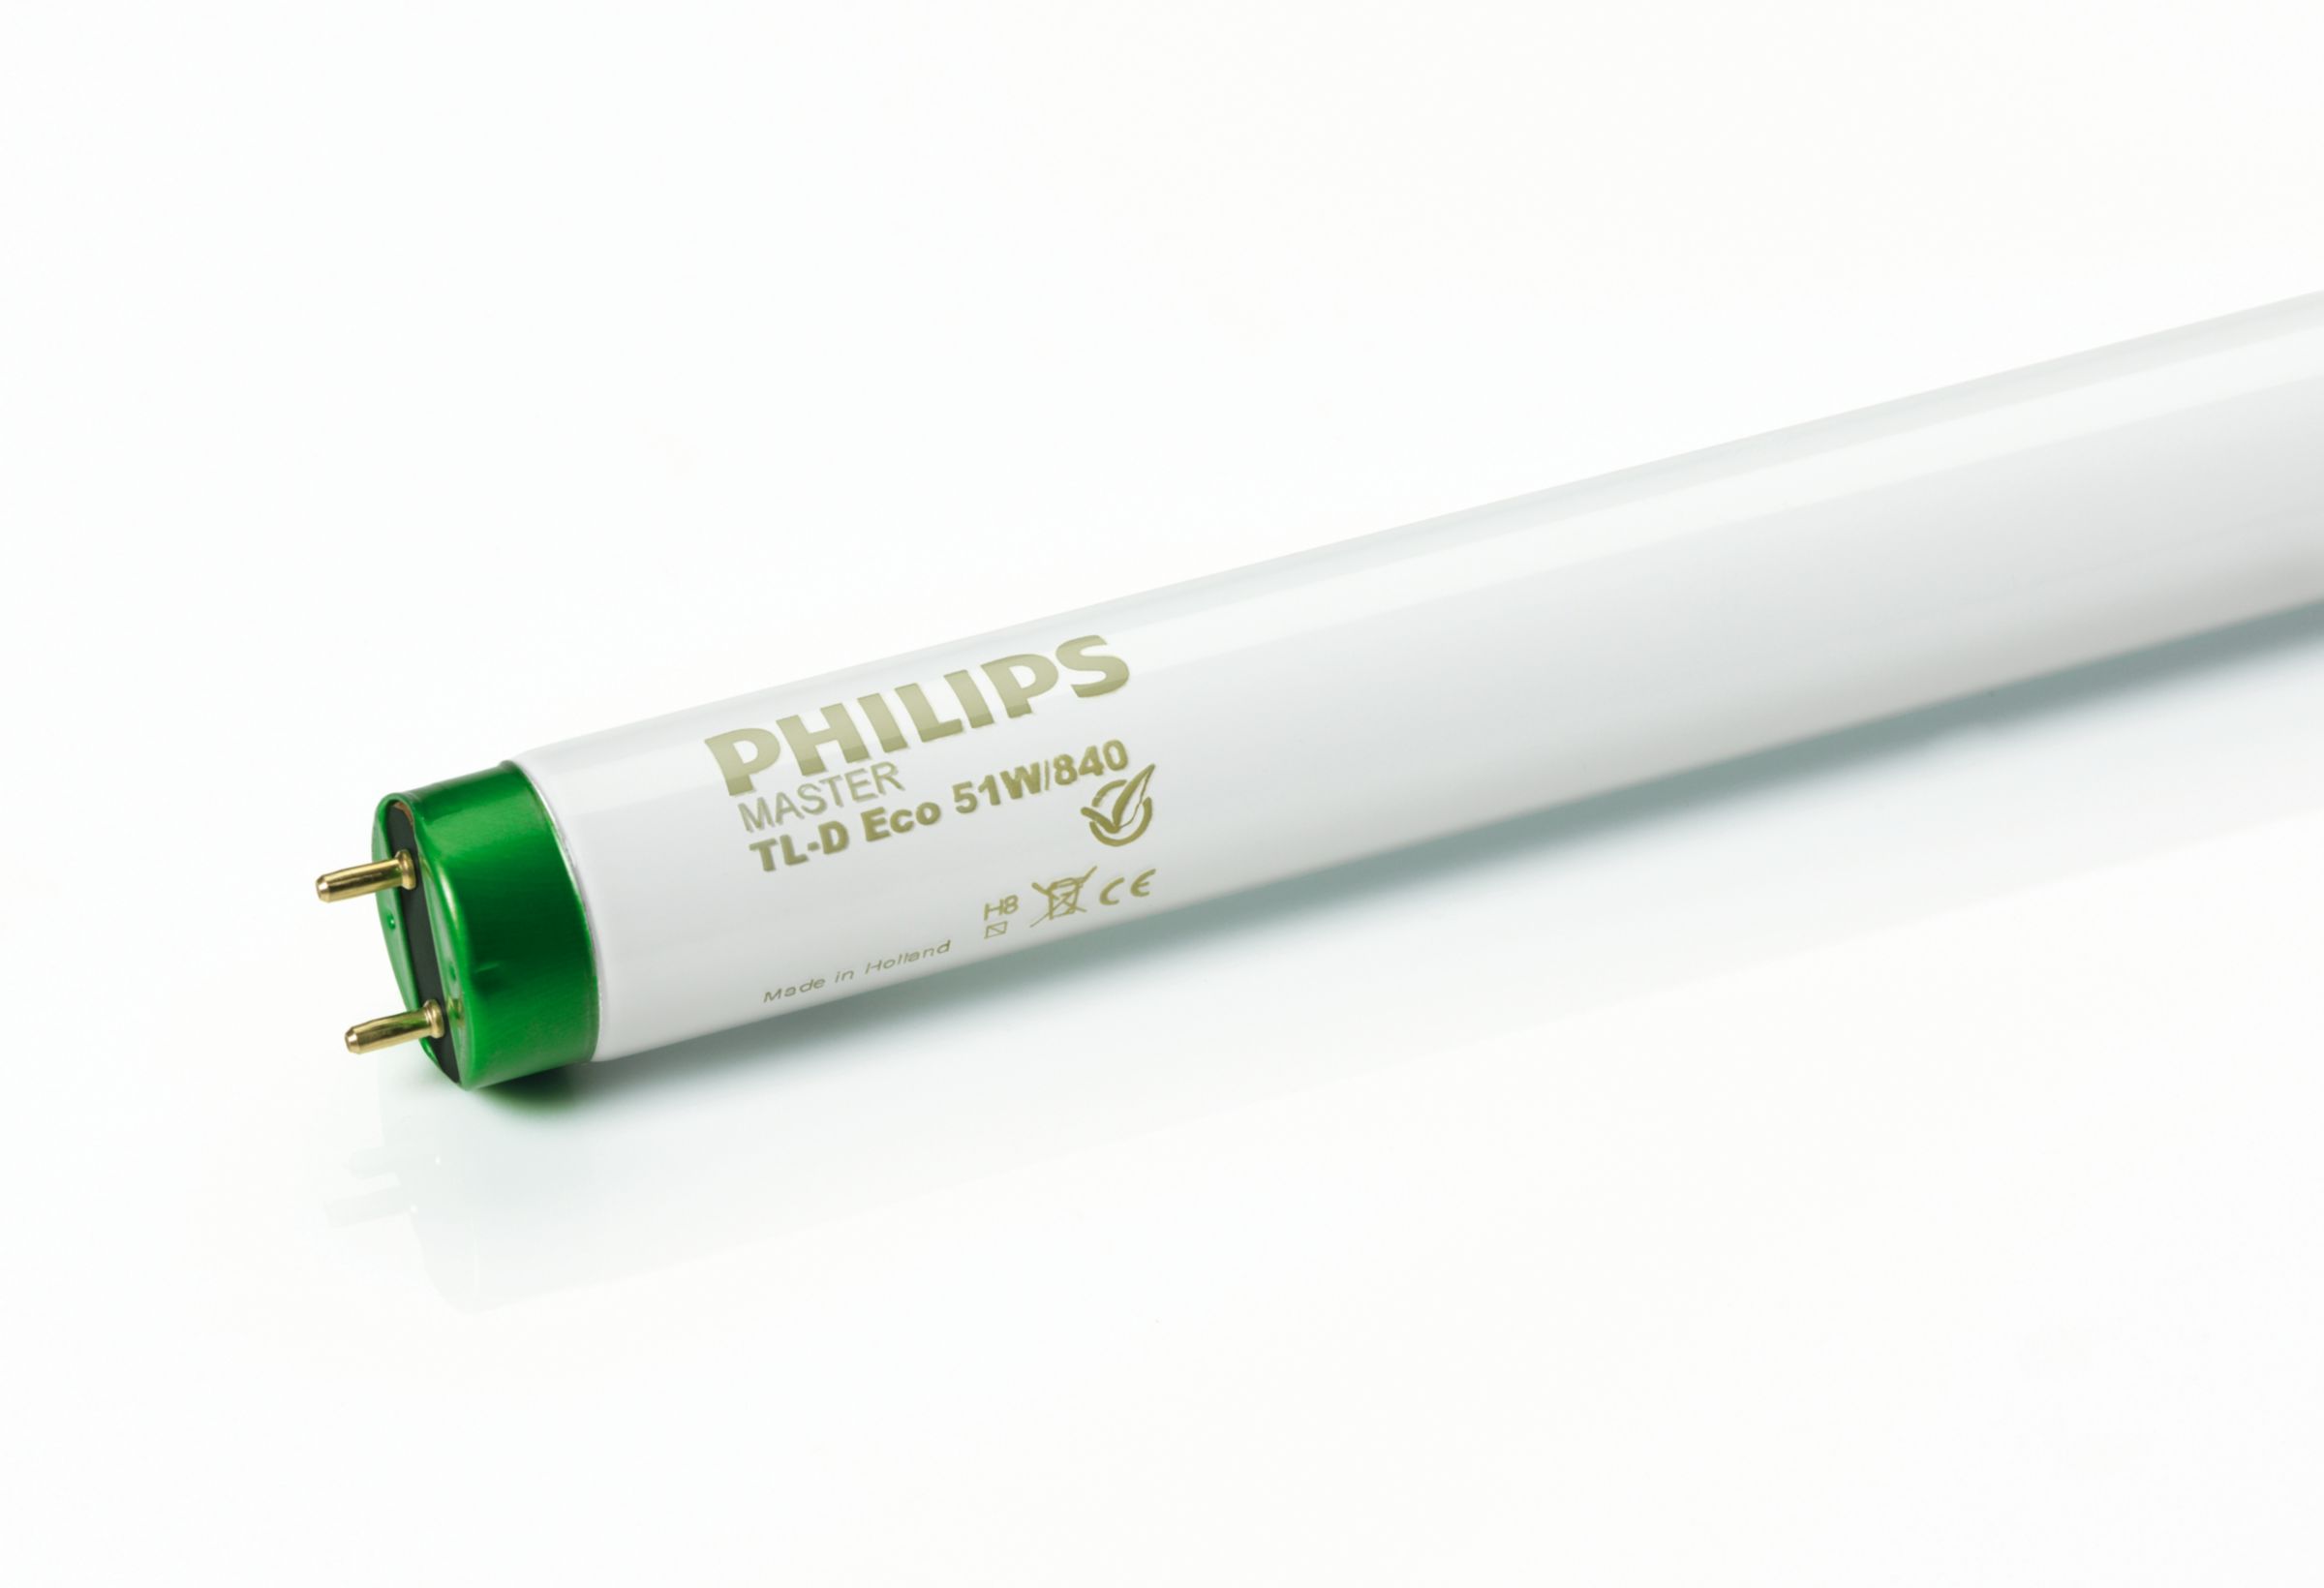 Lampe 840 Neutralweiß Philips Leuchtstoffröhre MASTER TL-D Eco 51W T8 